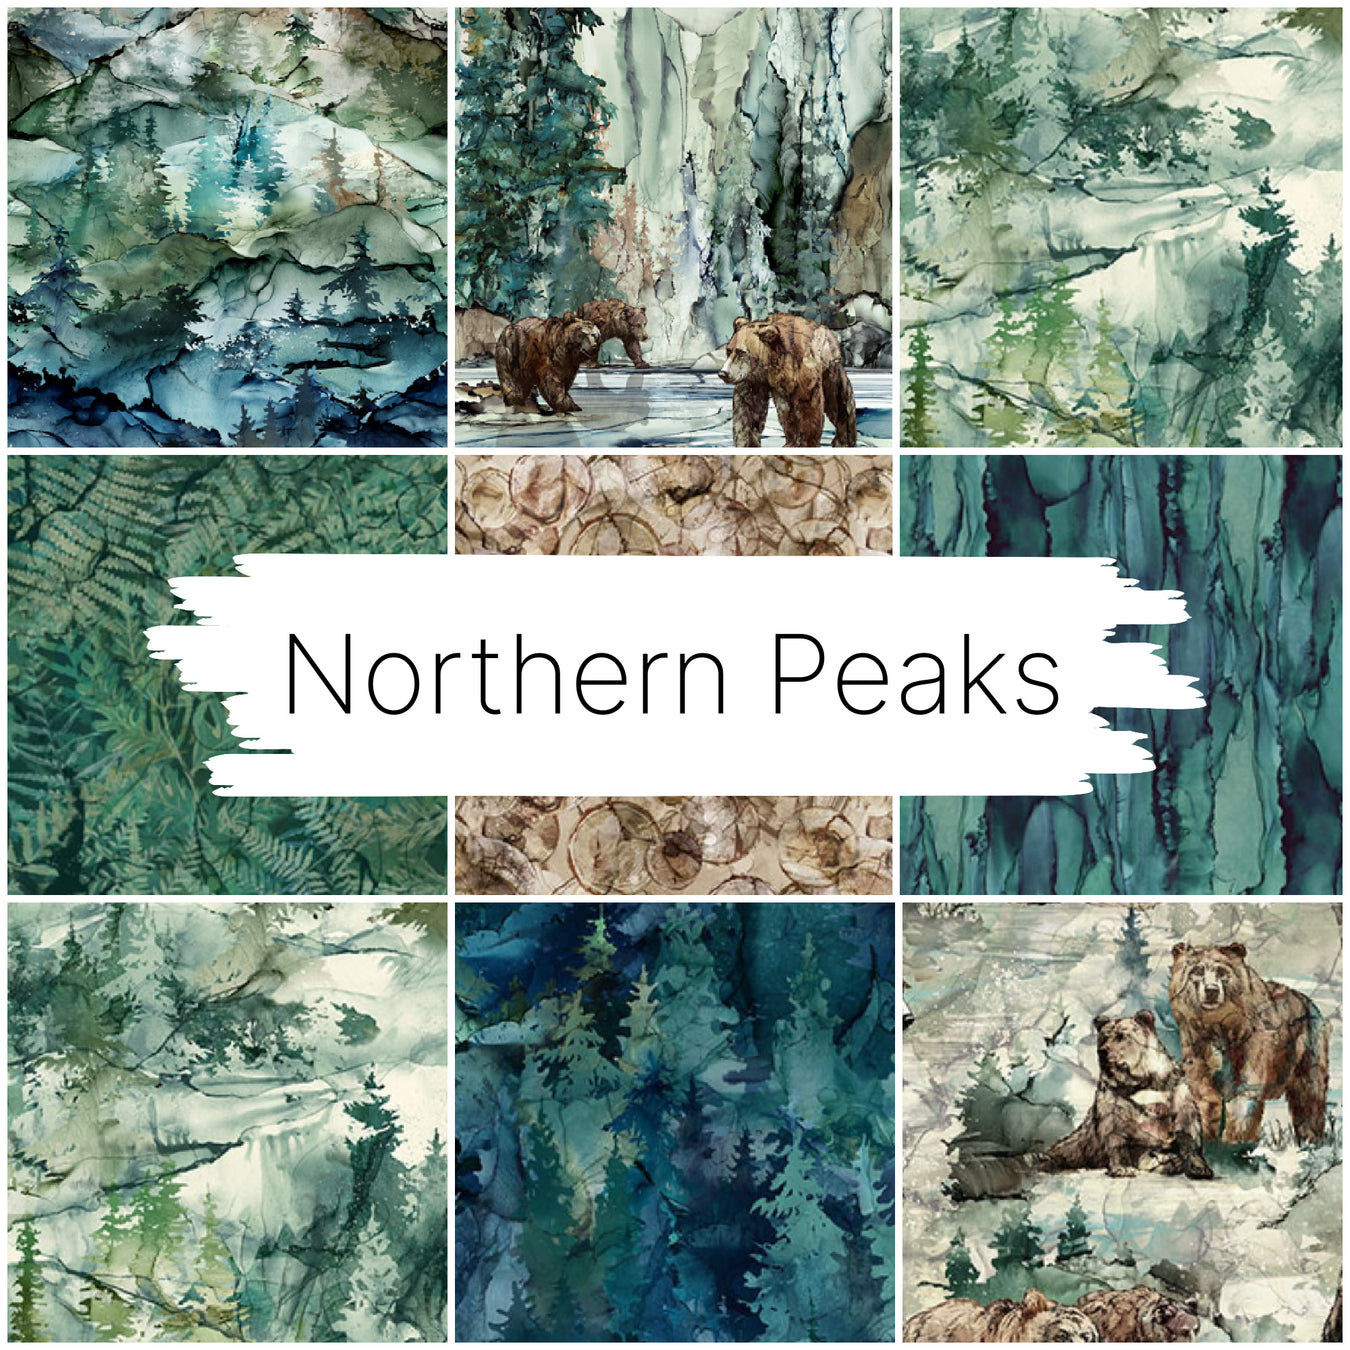 Northern Peaks